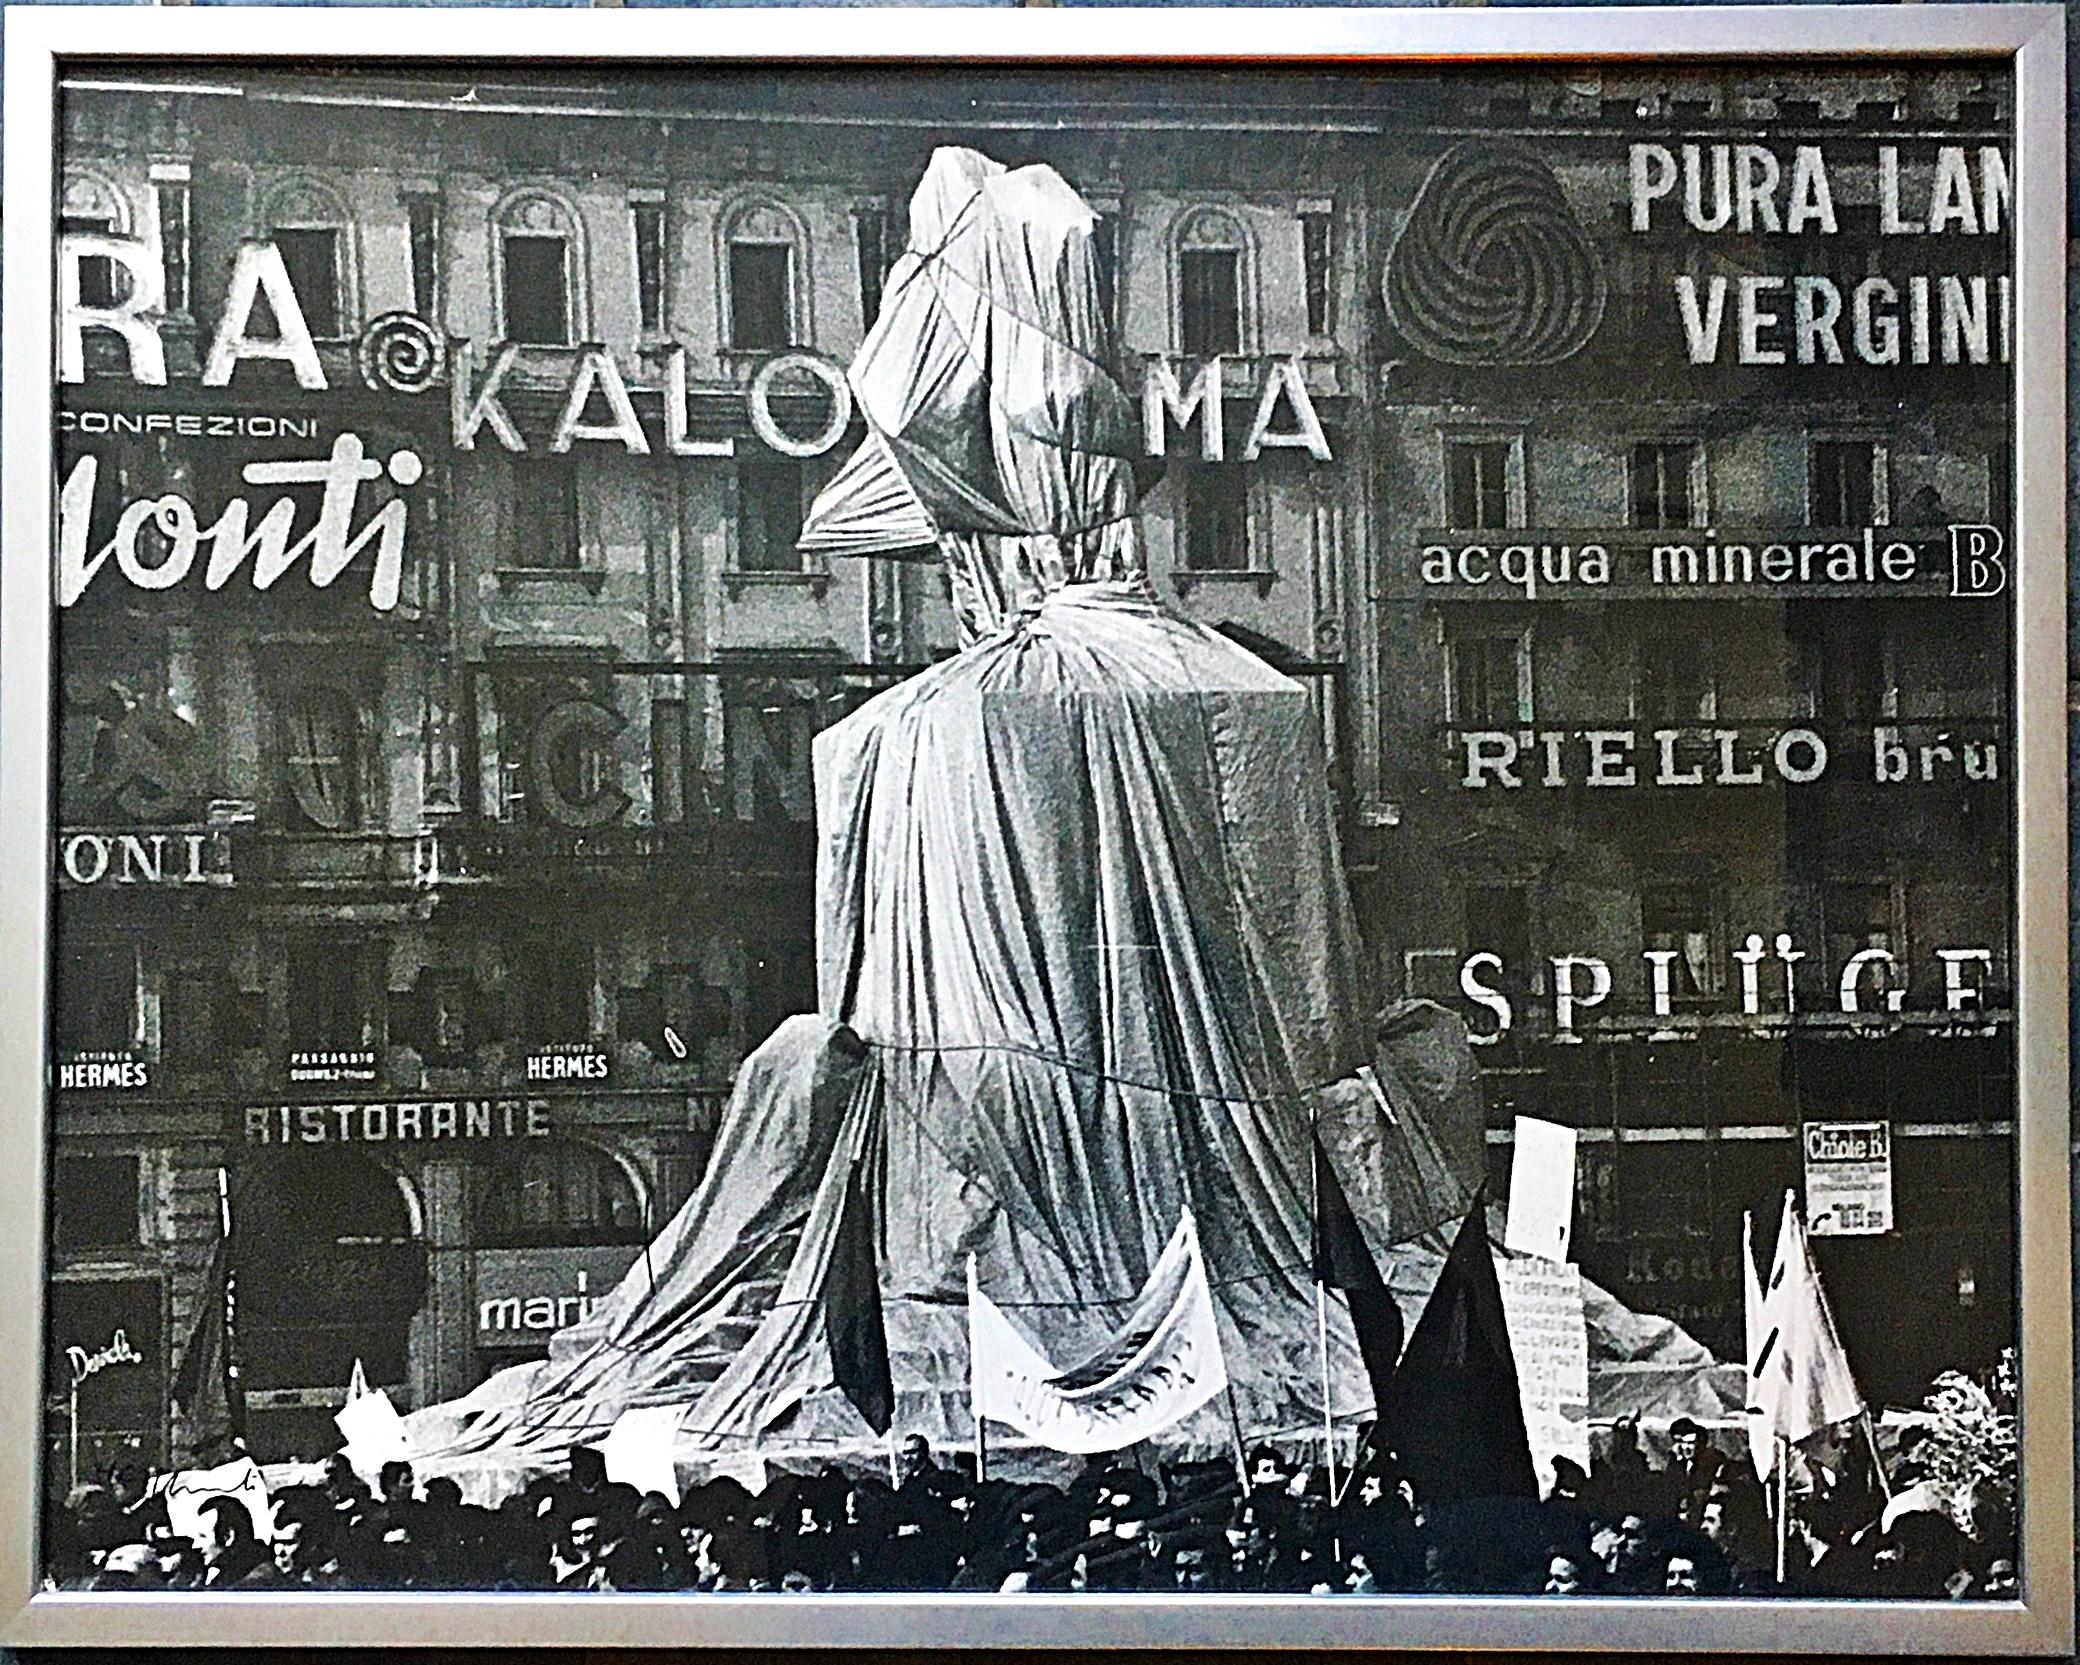 Wrapped Monument to Vittorio Emanuele II (HC hand signed by Christo), Hugo Mulas